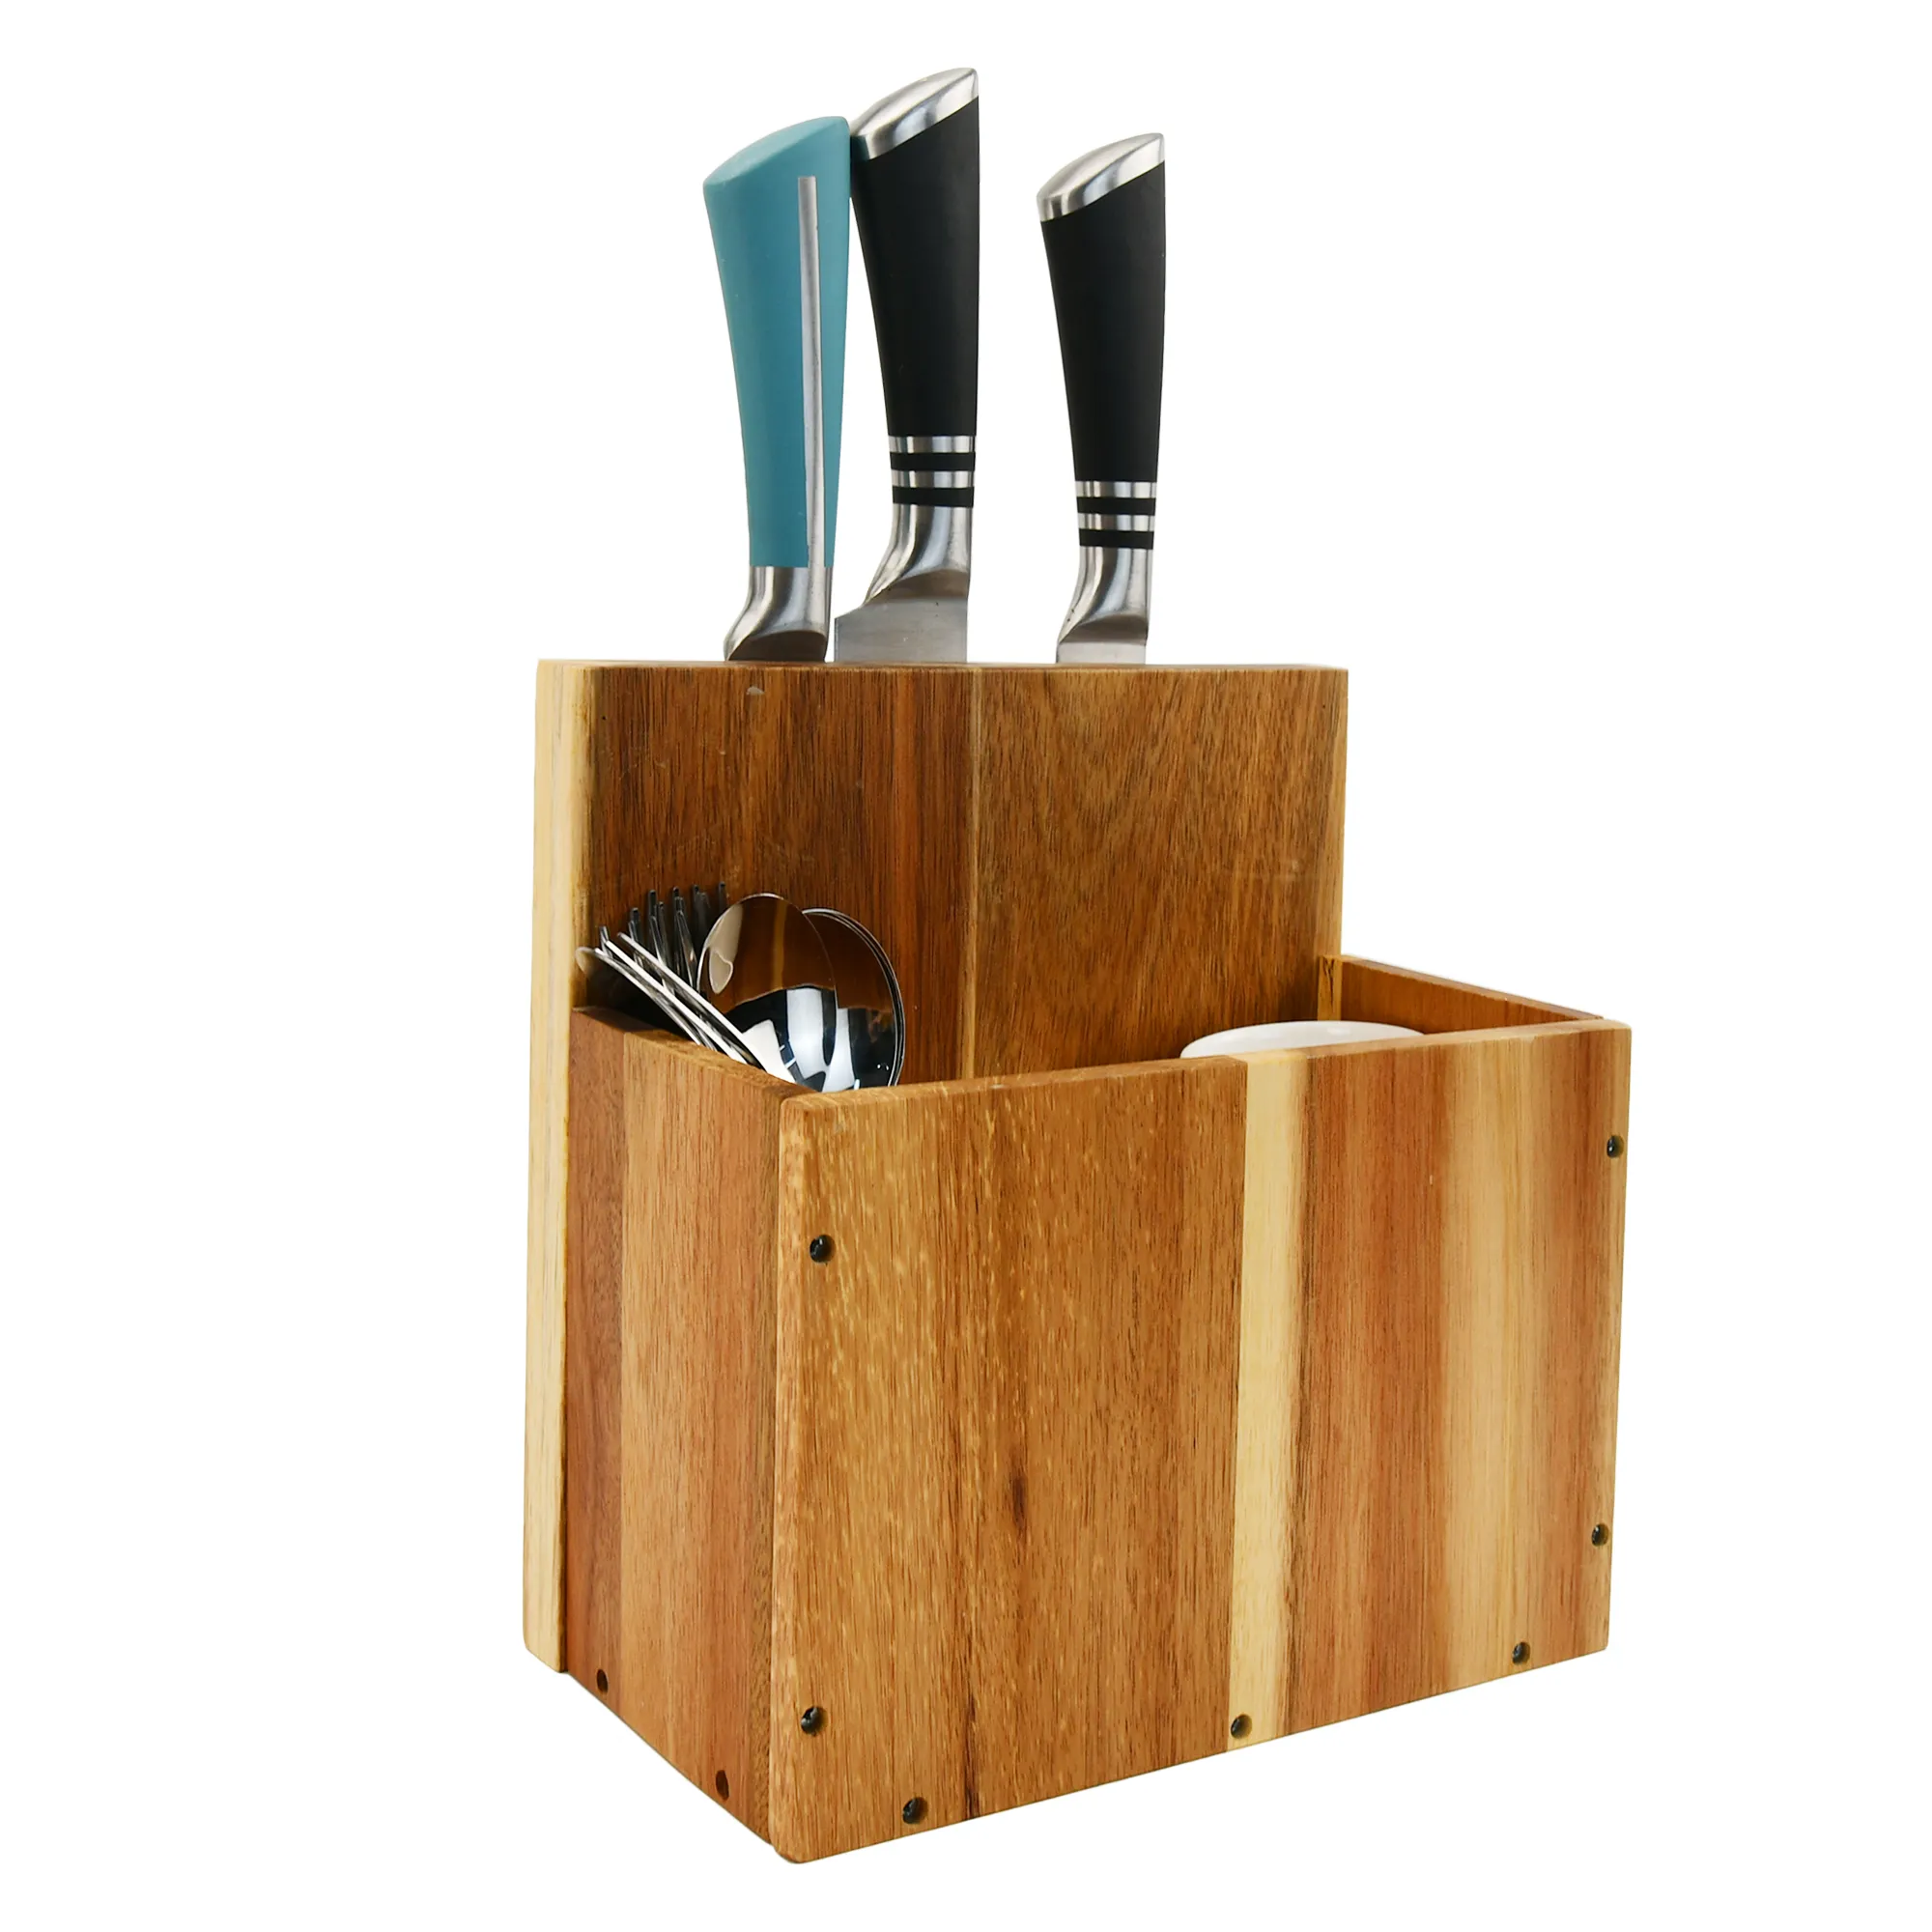 Modern Knife Utensil Holder For Countertop Steel Knife bamboo Holder Kitchen Counter Protect Storage Organizer